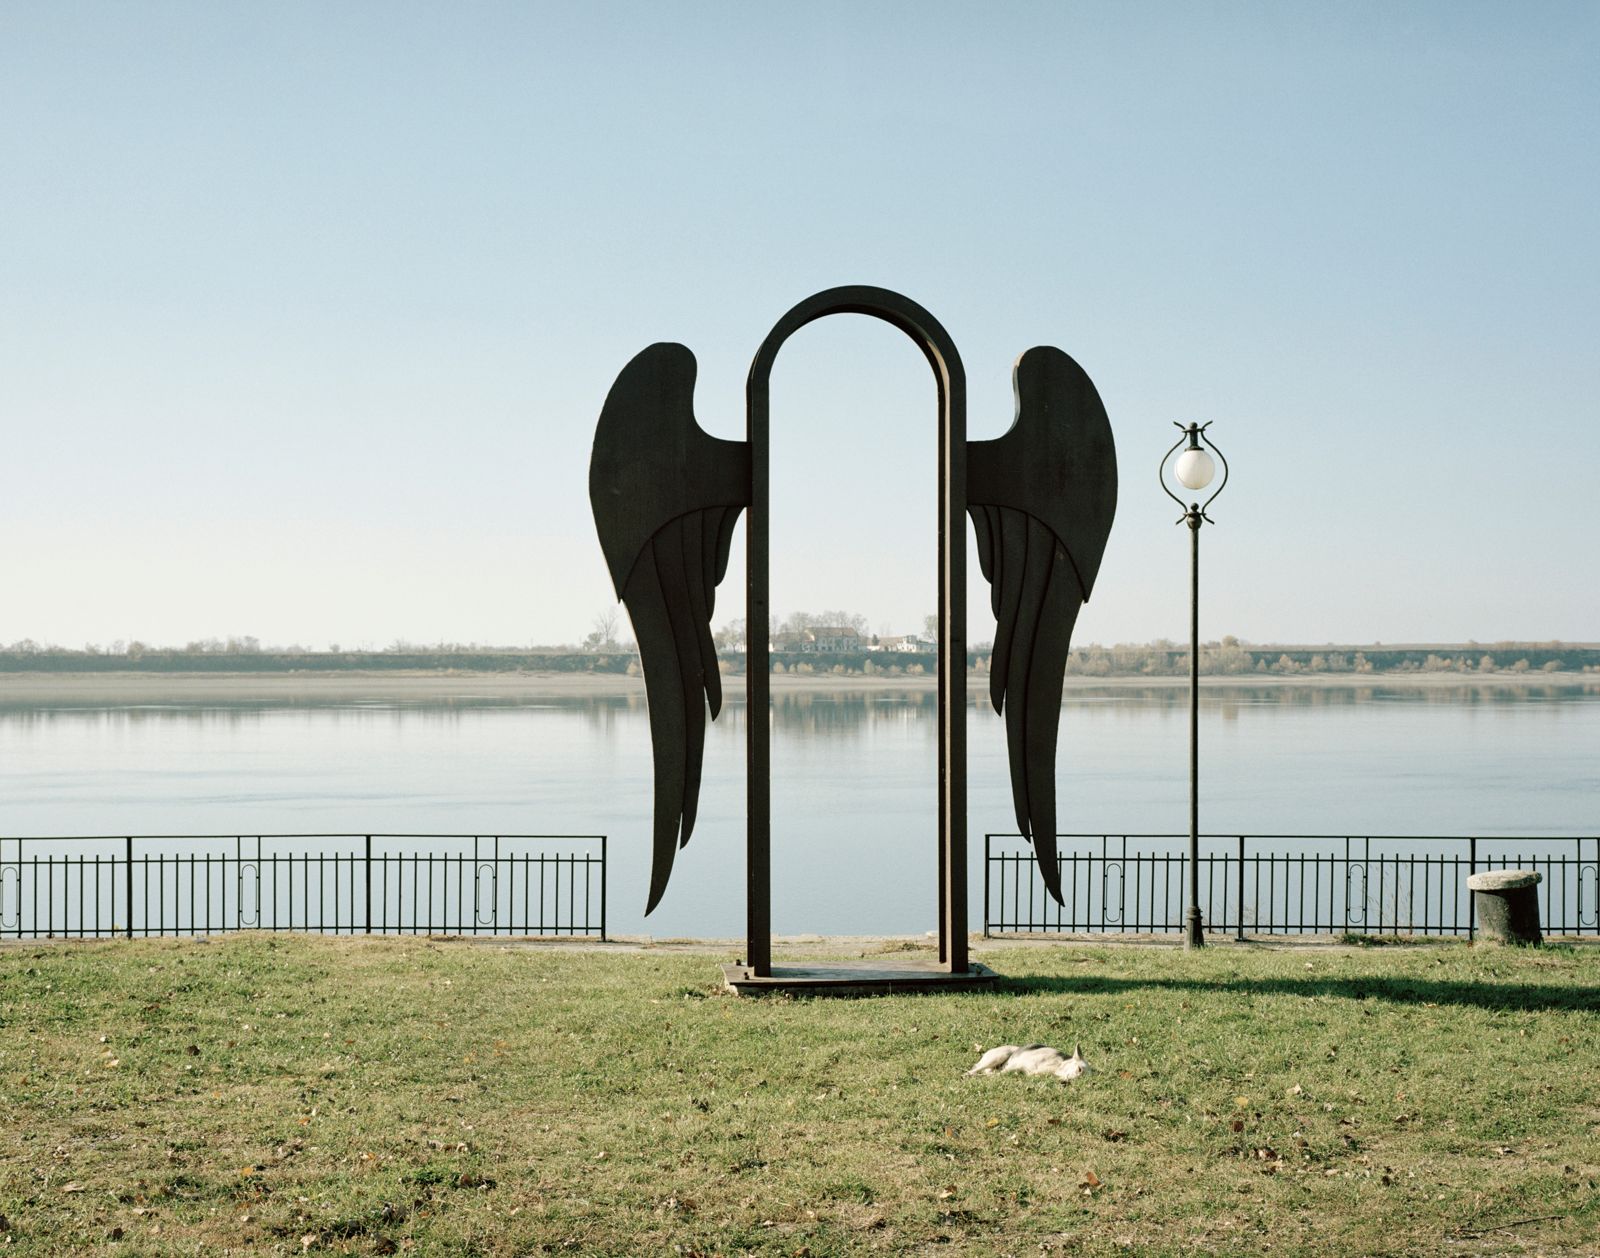 © Tommaso Rada - Romania, Cetate. A sculpture on the riverbanks of the Danube